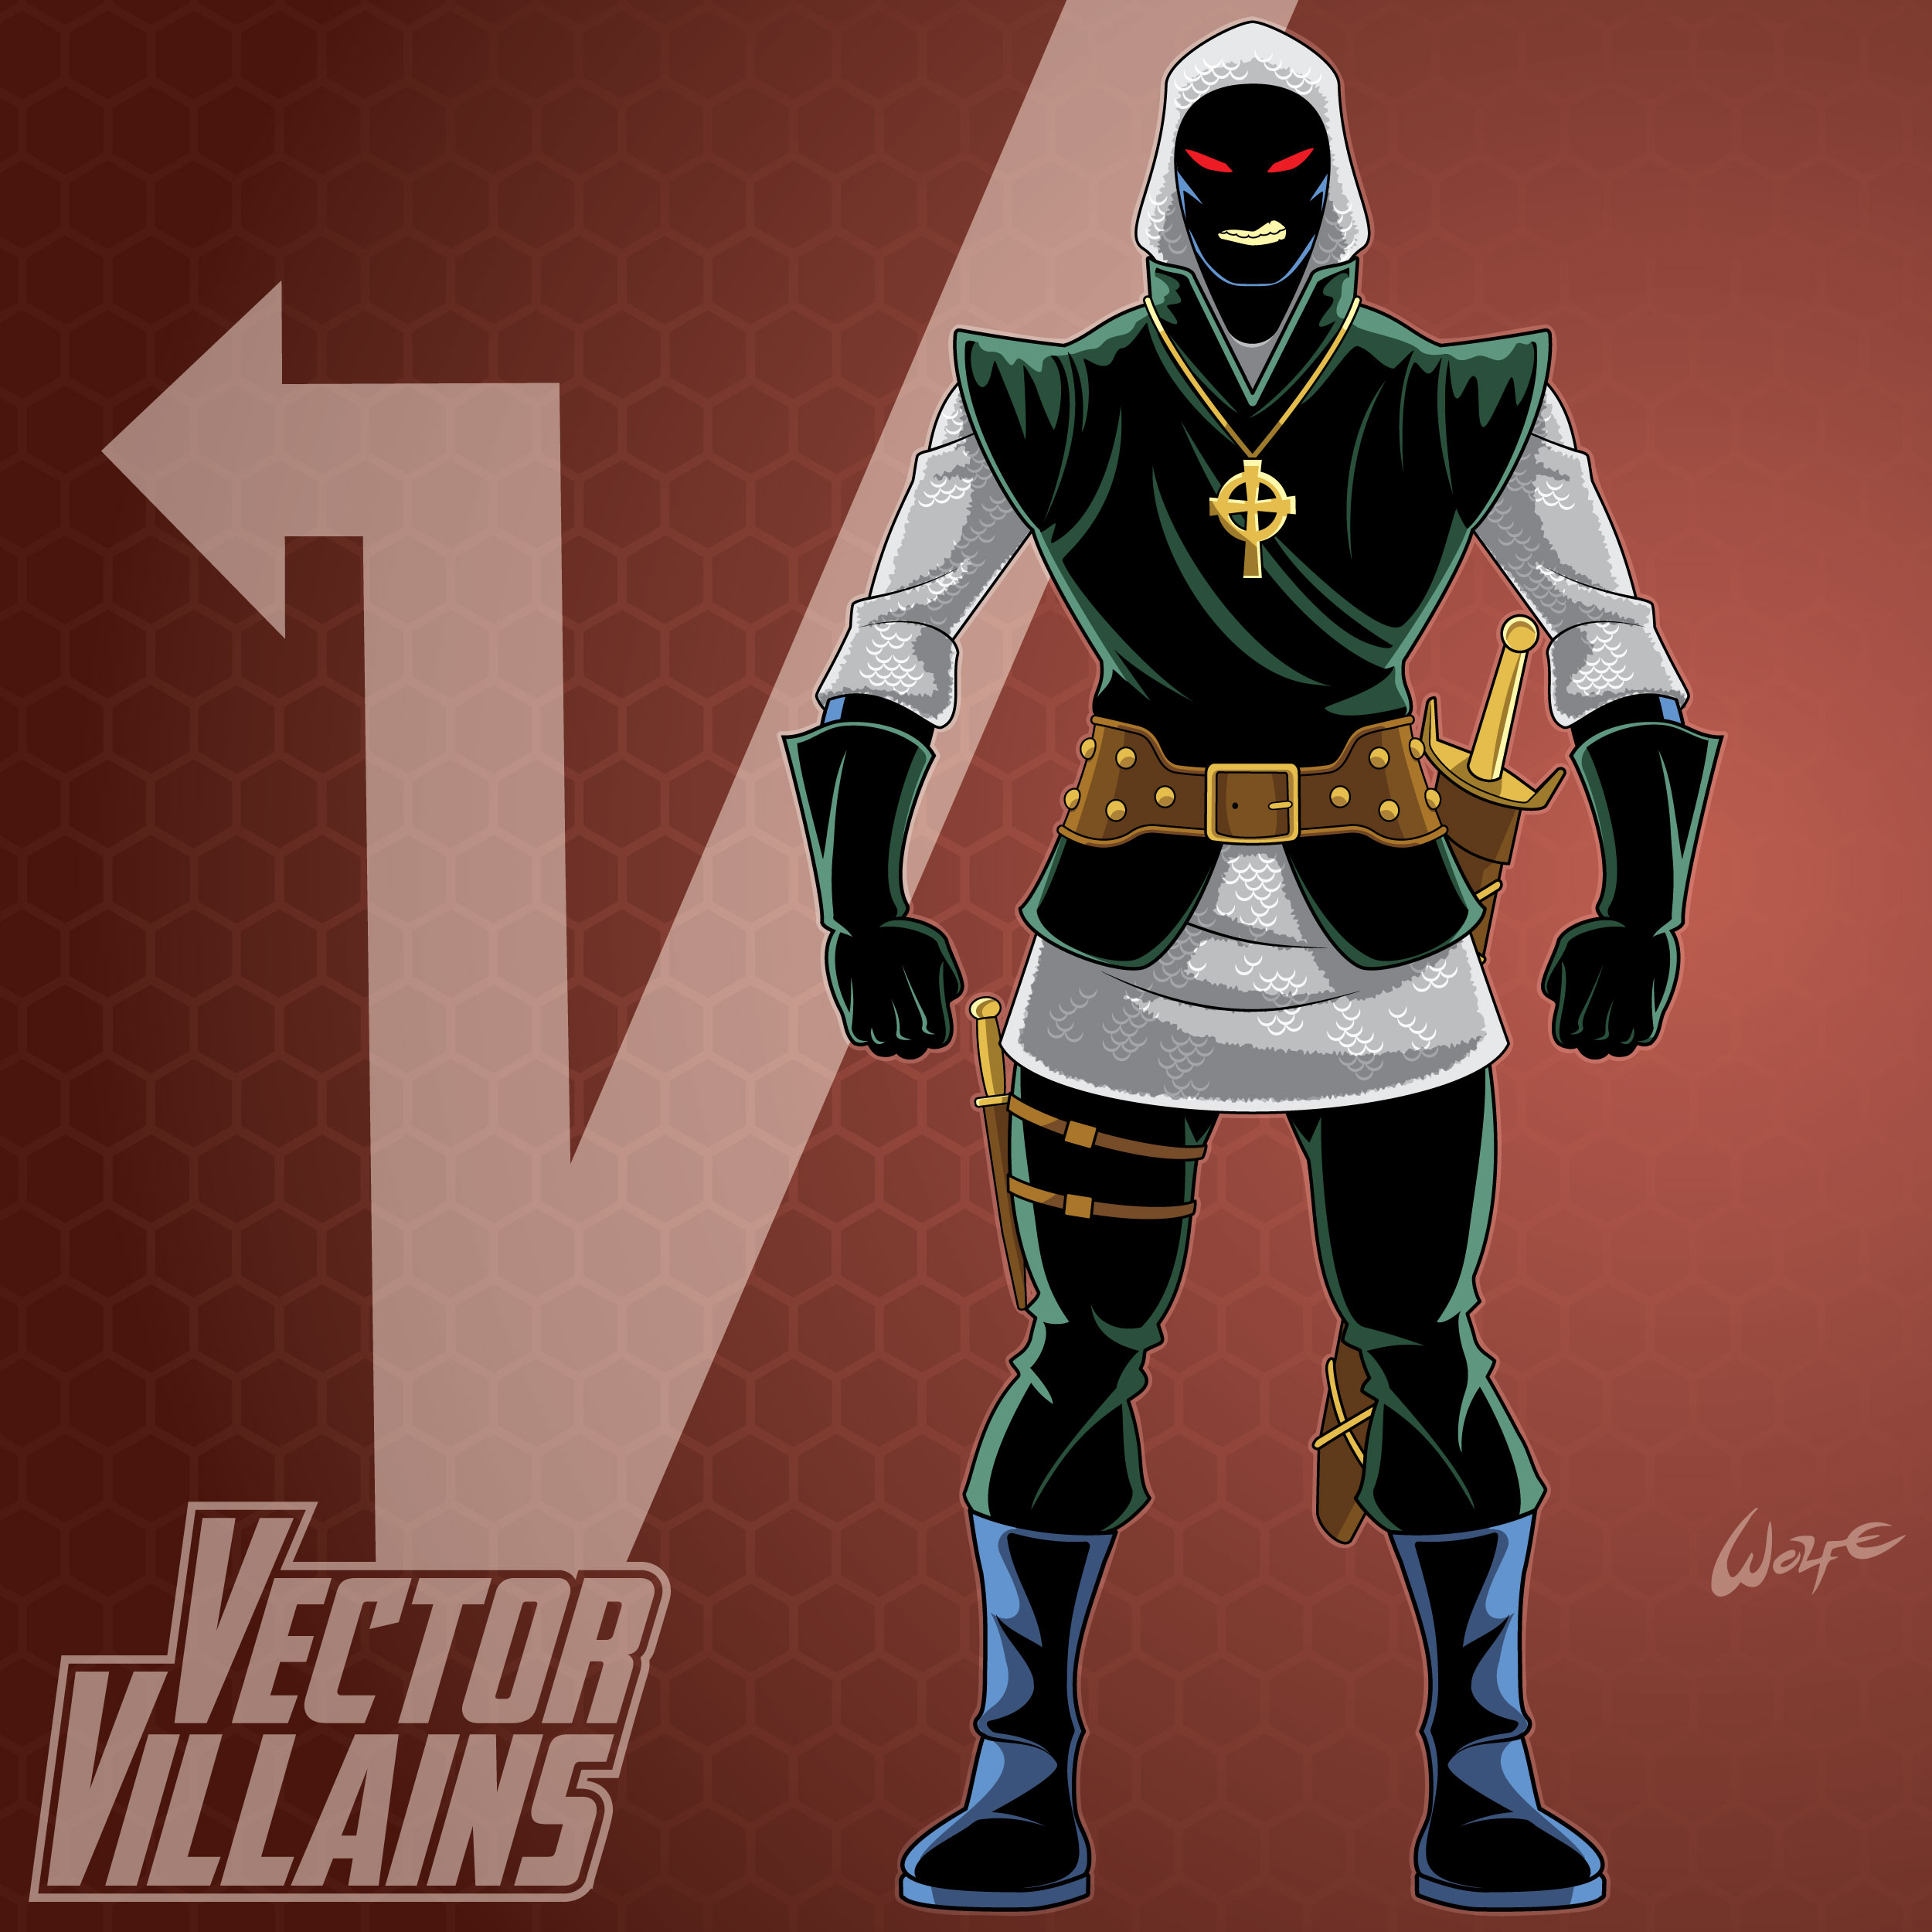 Ant-Man - Villains by CaptainDutch on DeviantArt